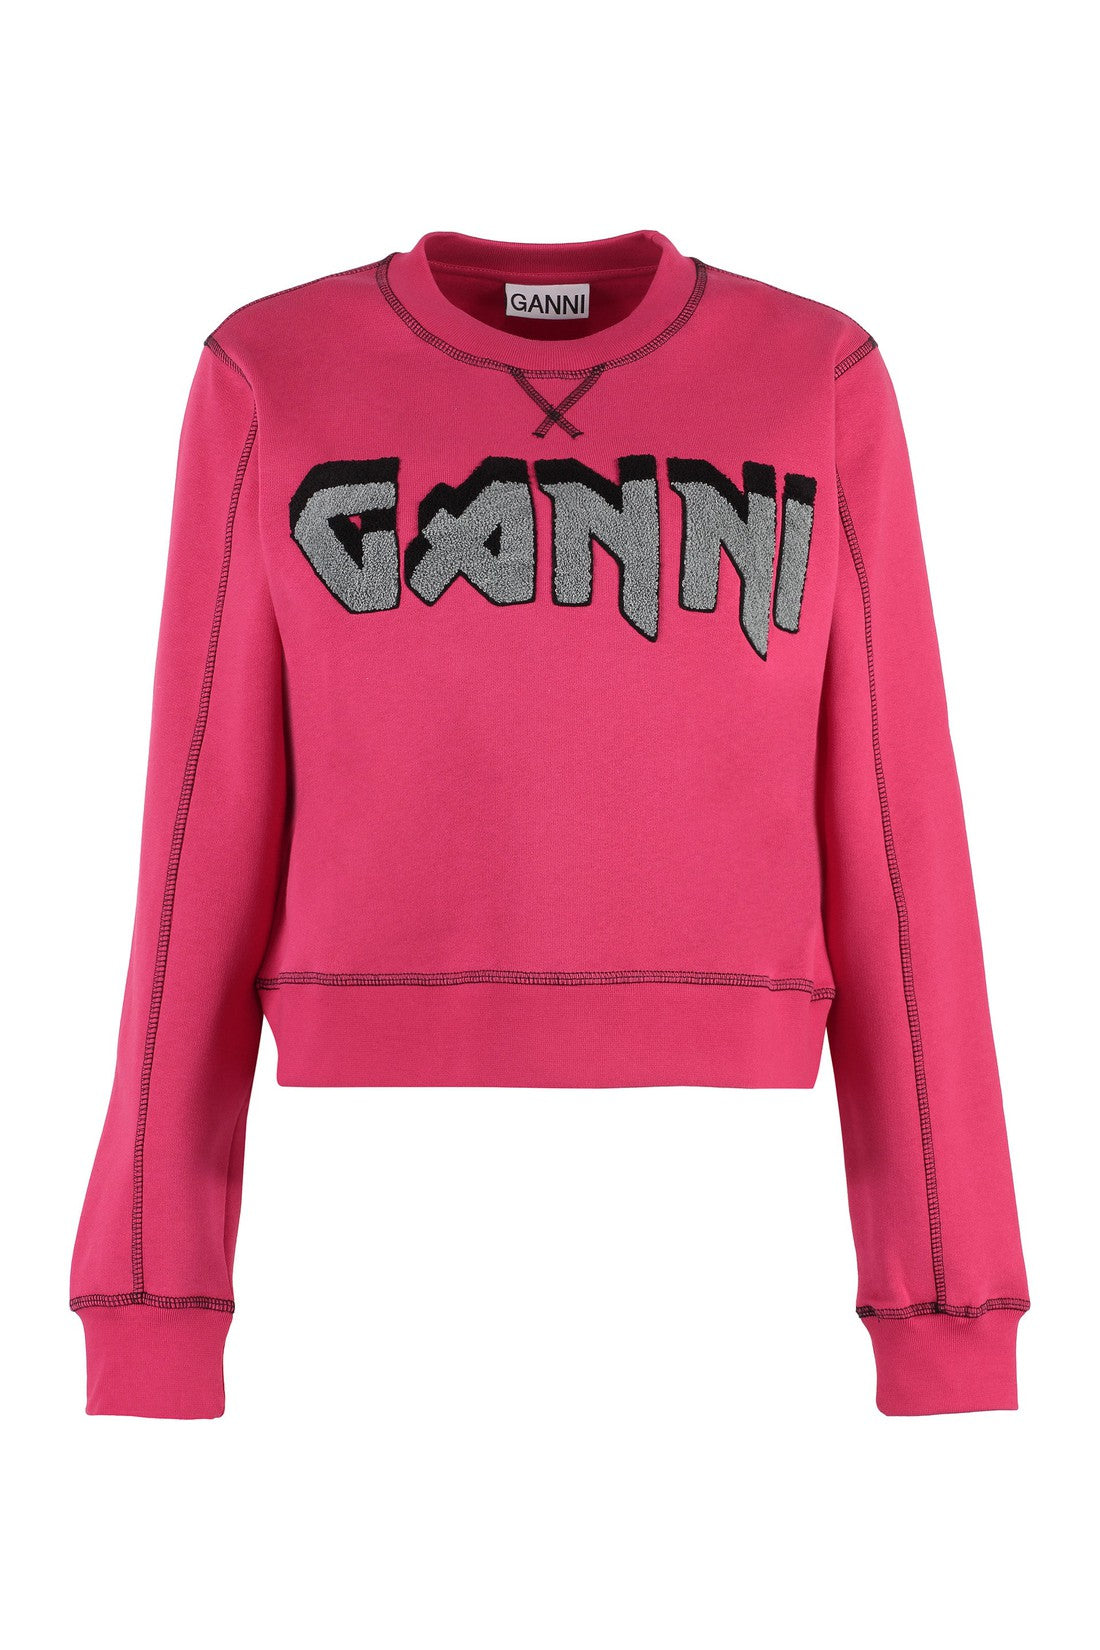 GANNI-OUTLET-SALE-Logo embroidered cotton sweatshirt-ARCHIVIST